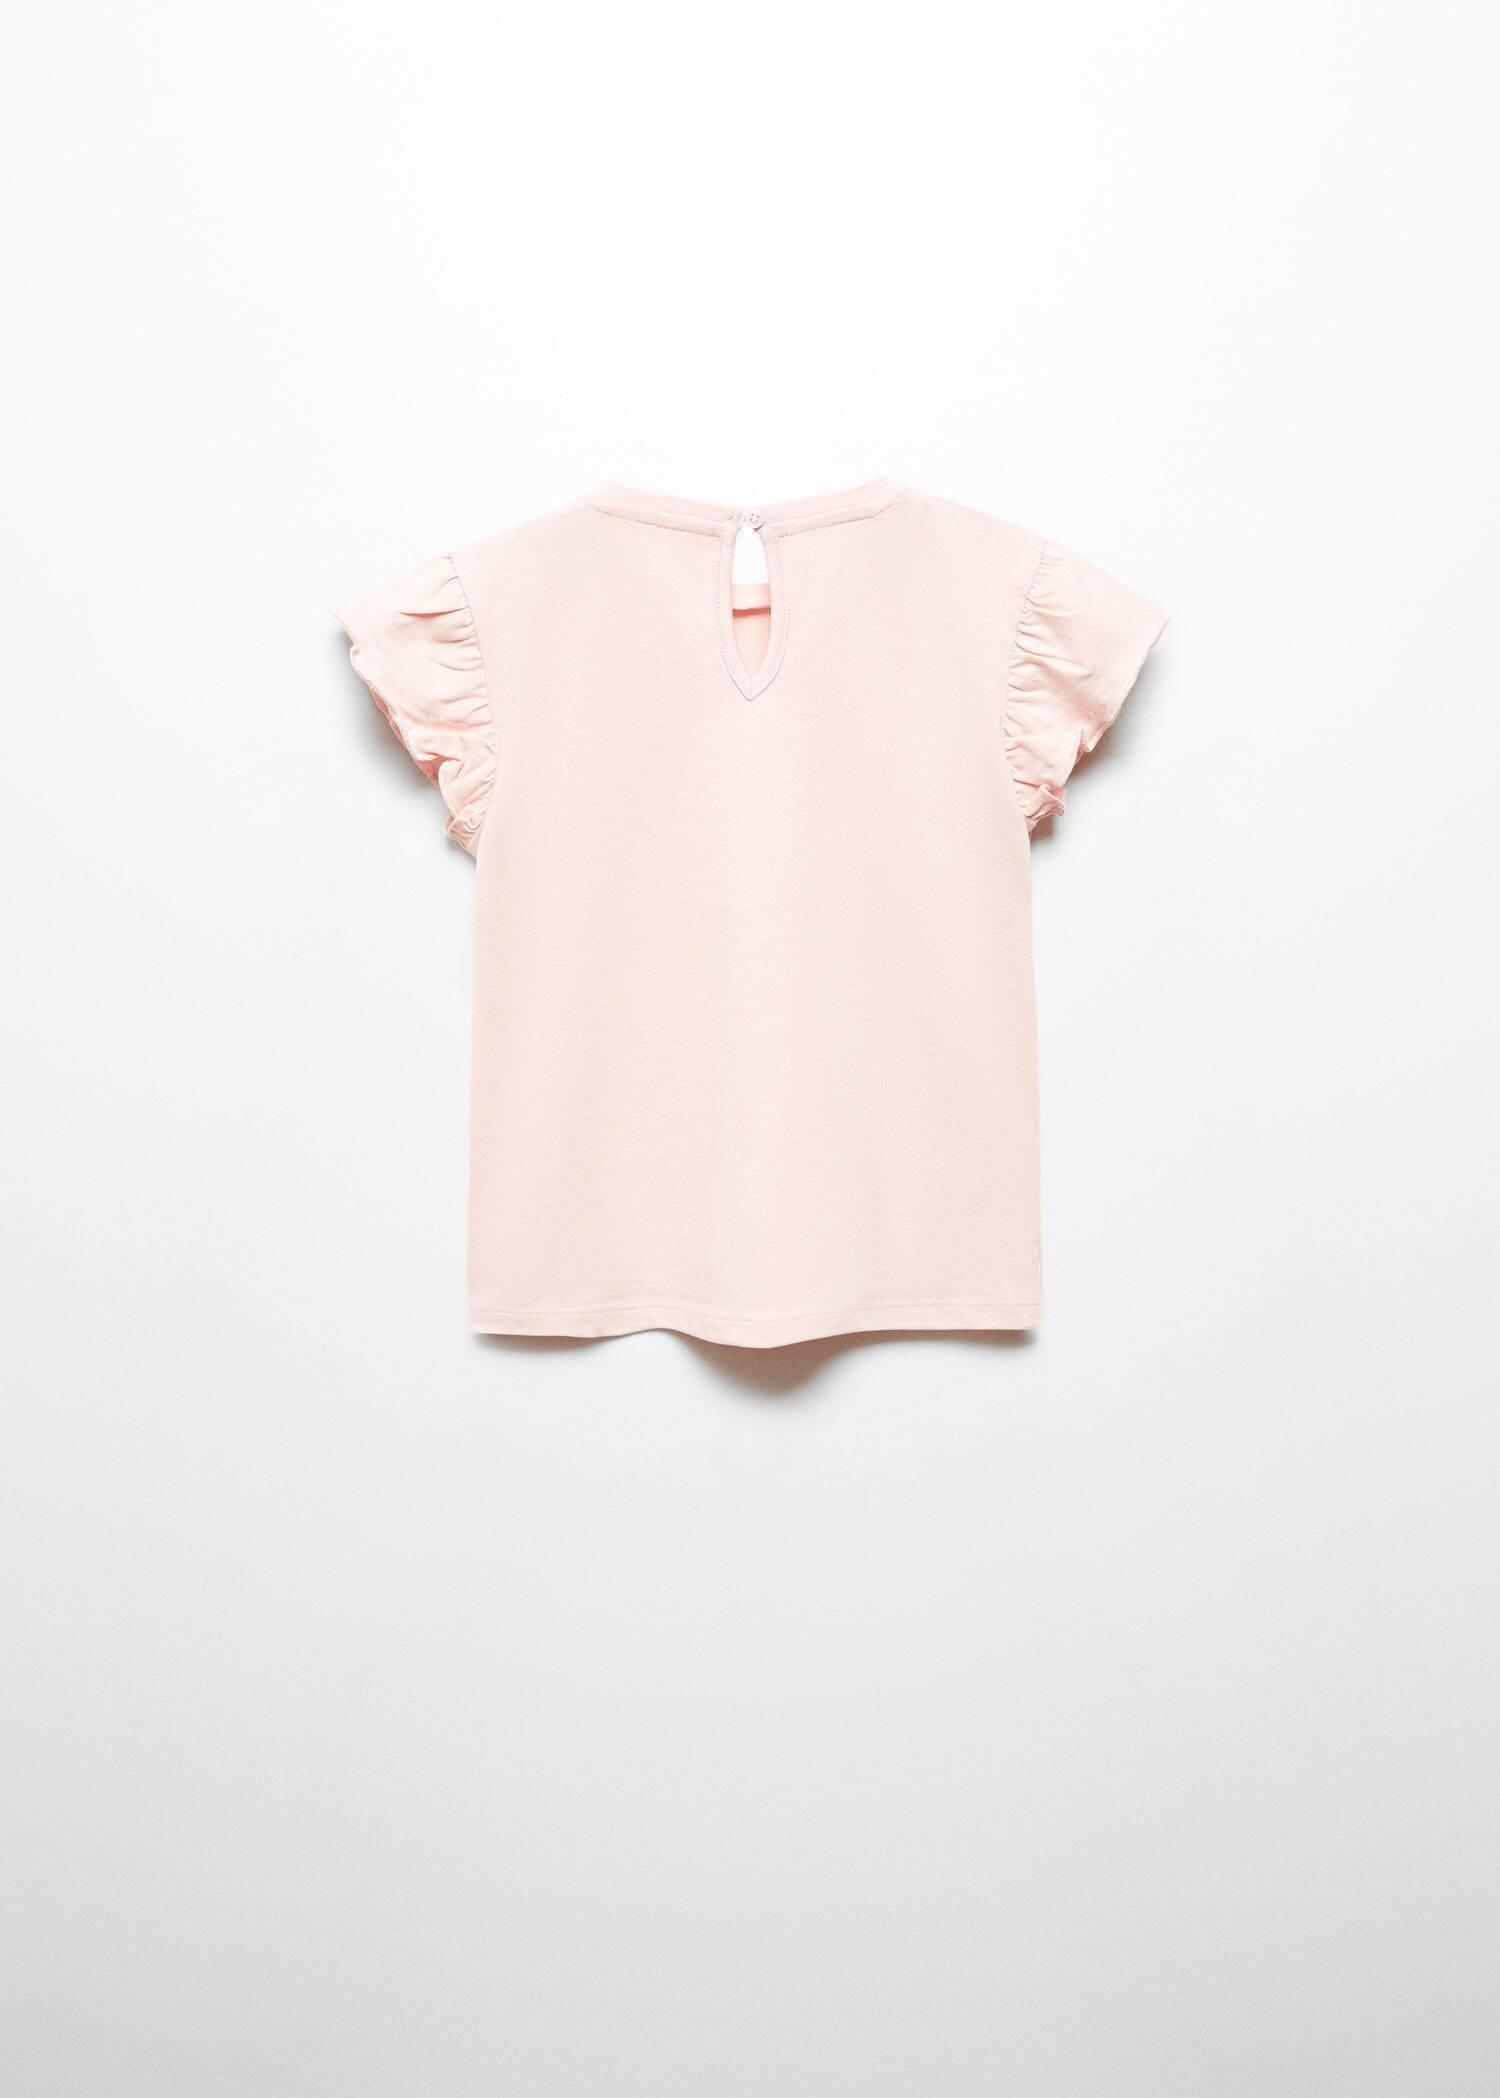 Mango - Pink Frills Cotton T-Shirt, Kids Girls